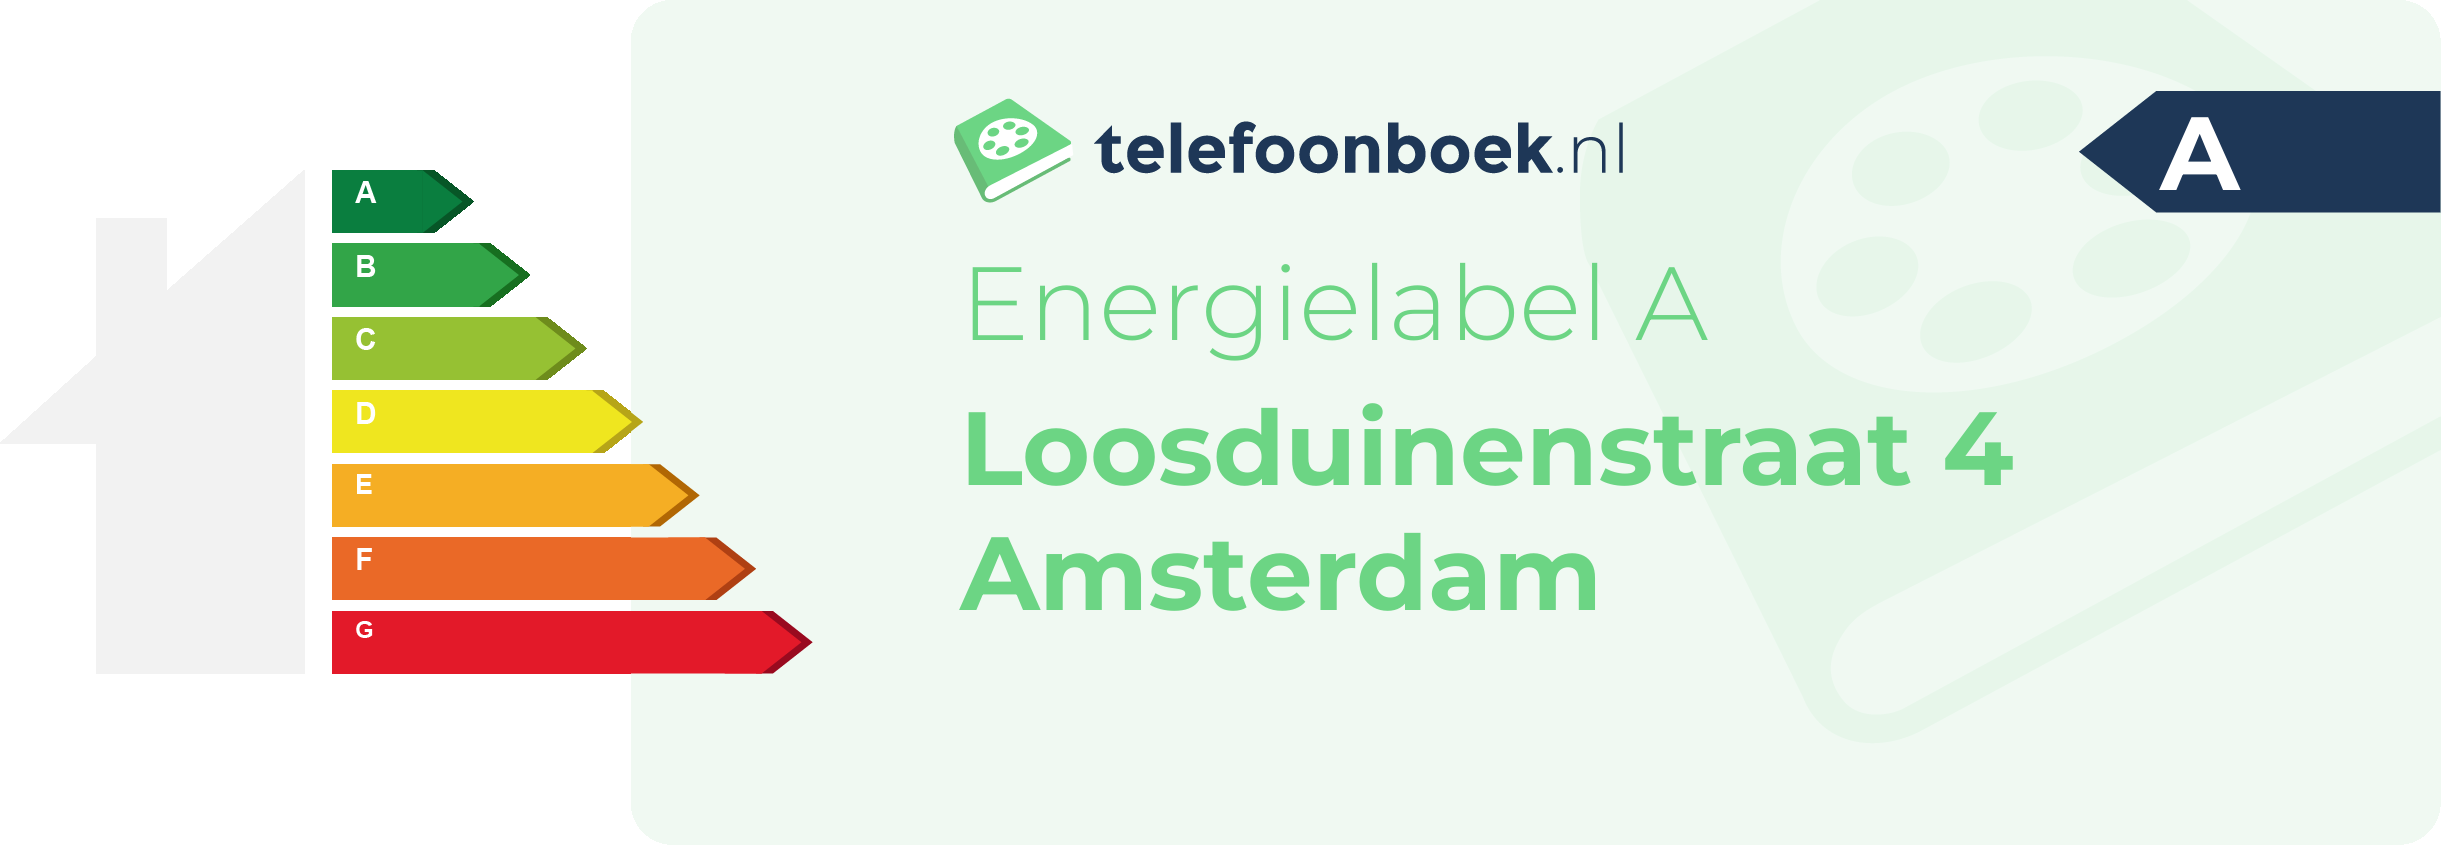 Energielabel Loosduinenstraat 4 Amsterdam